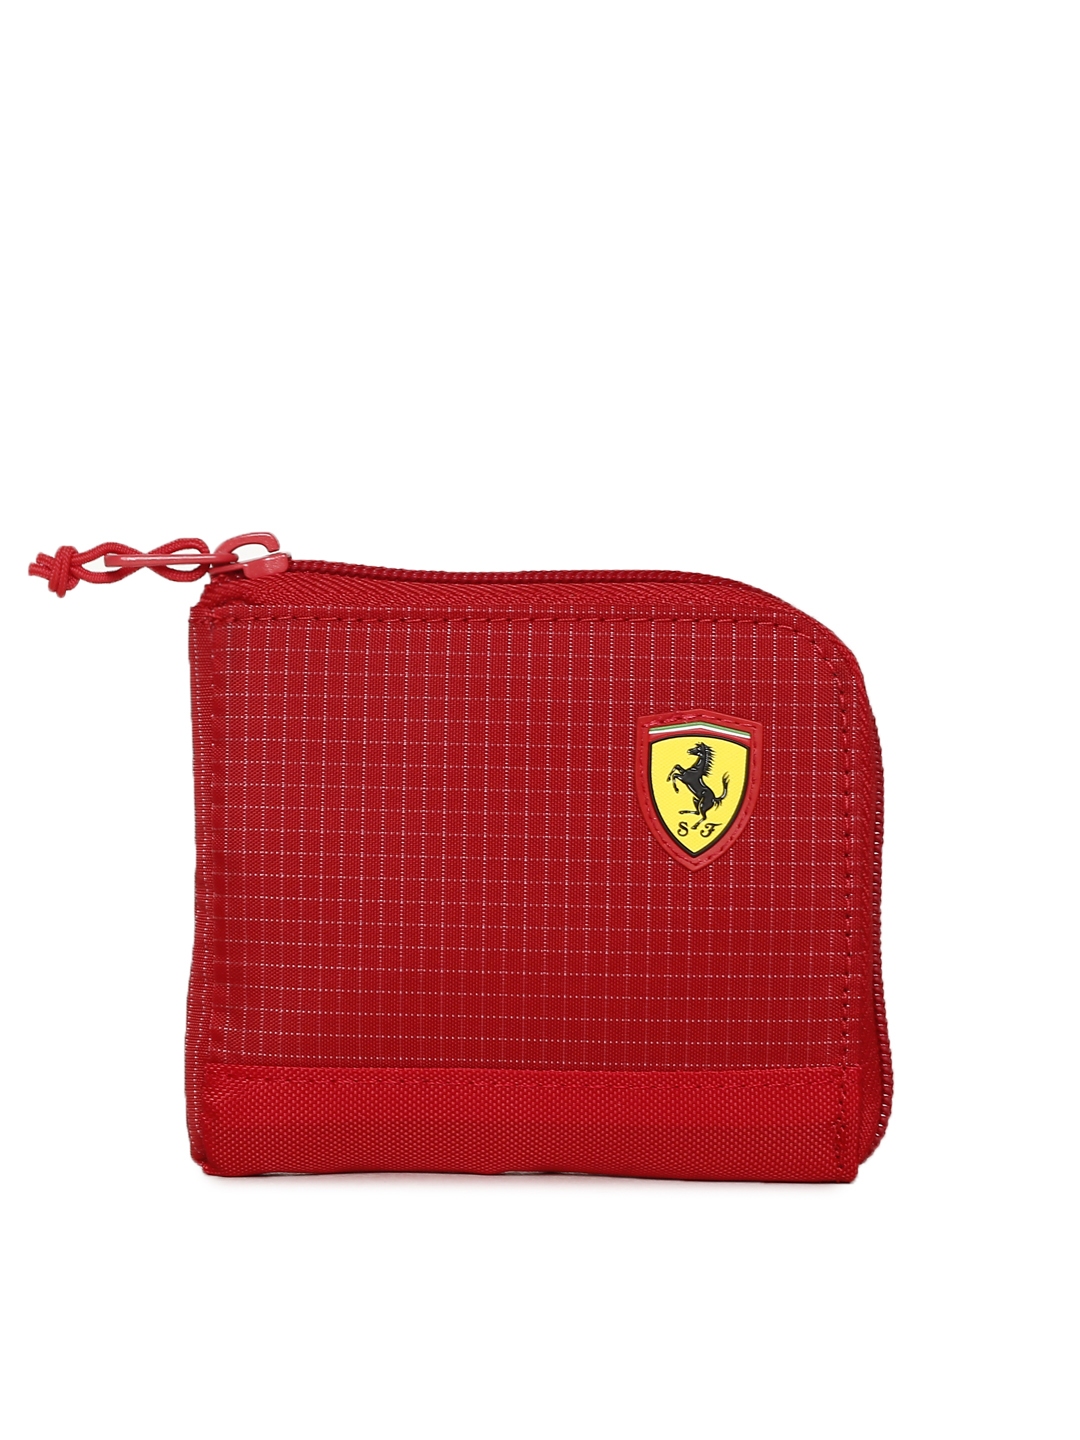 Puma Red Ferrari Wallet | vlr.eng.br